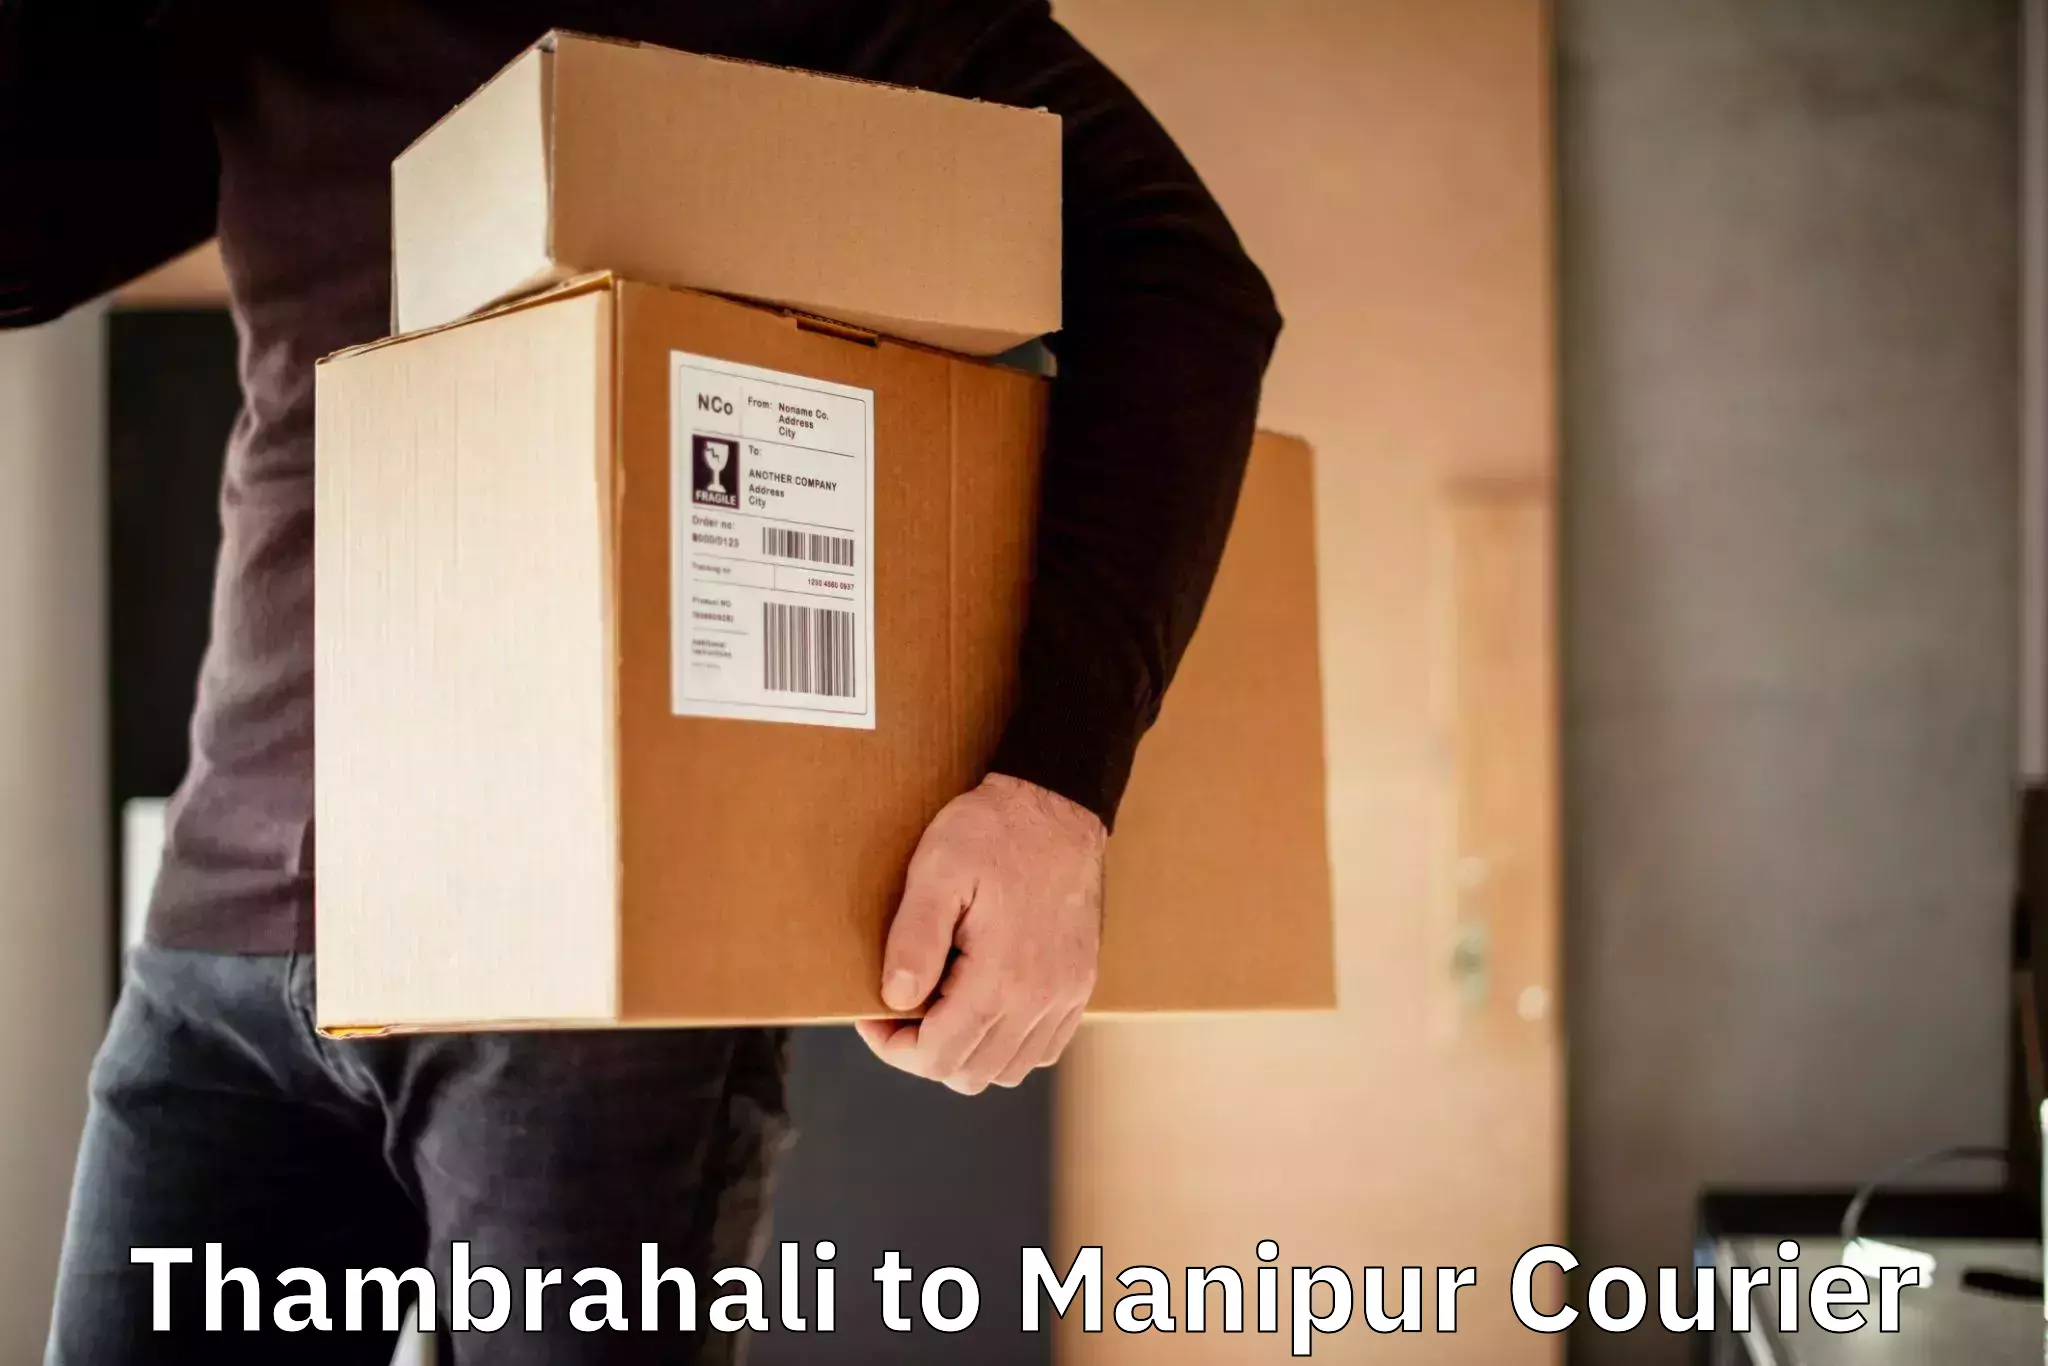 Digital courier platforms Thambrahali to Manipur